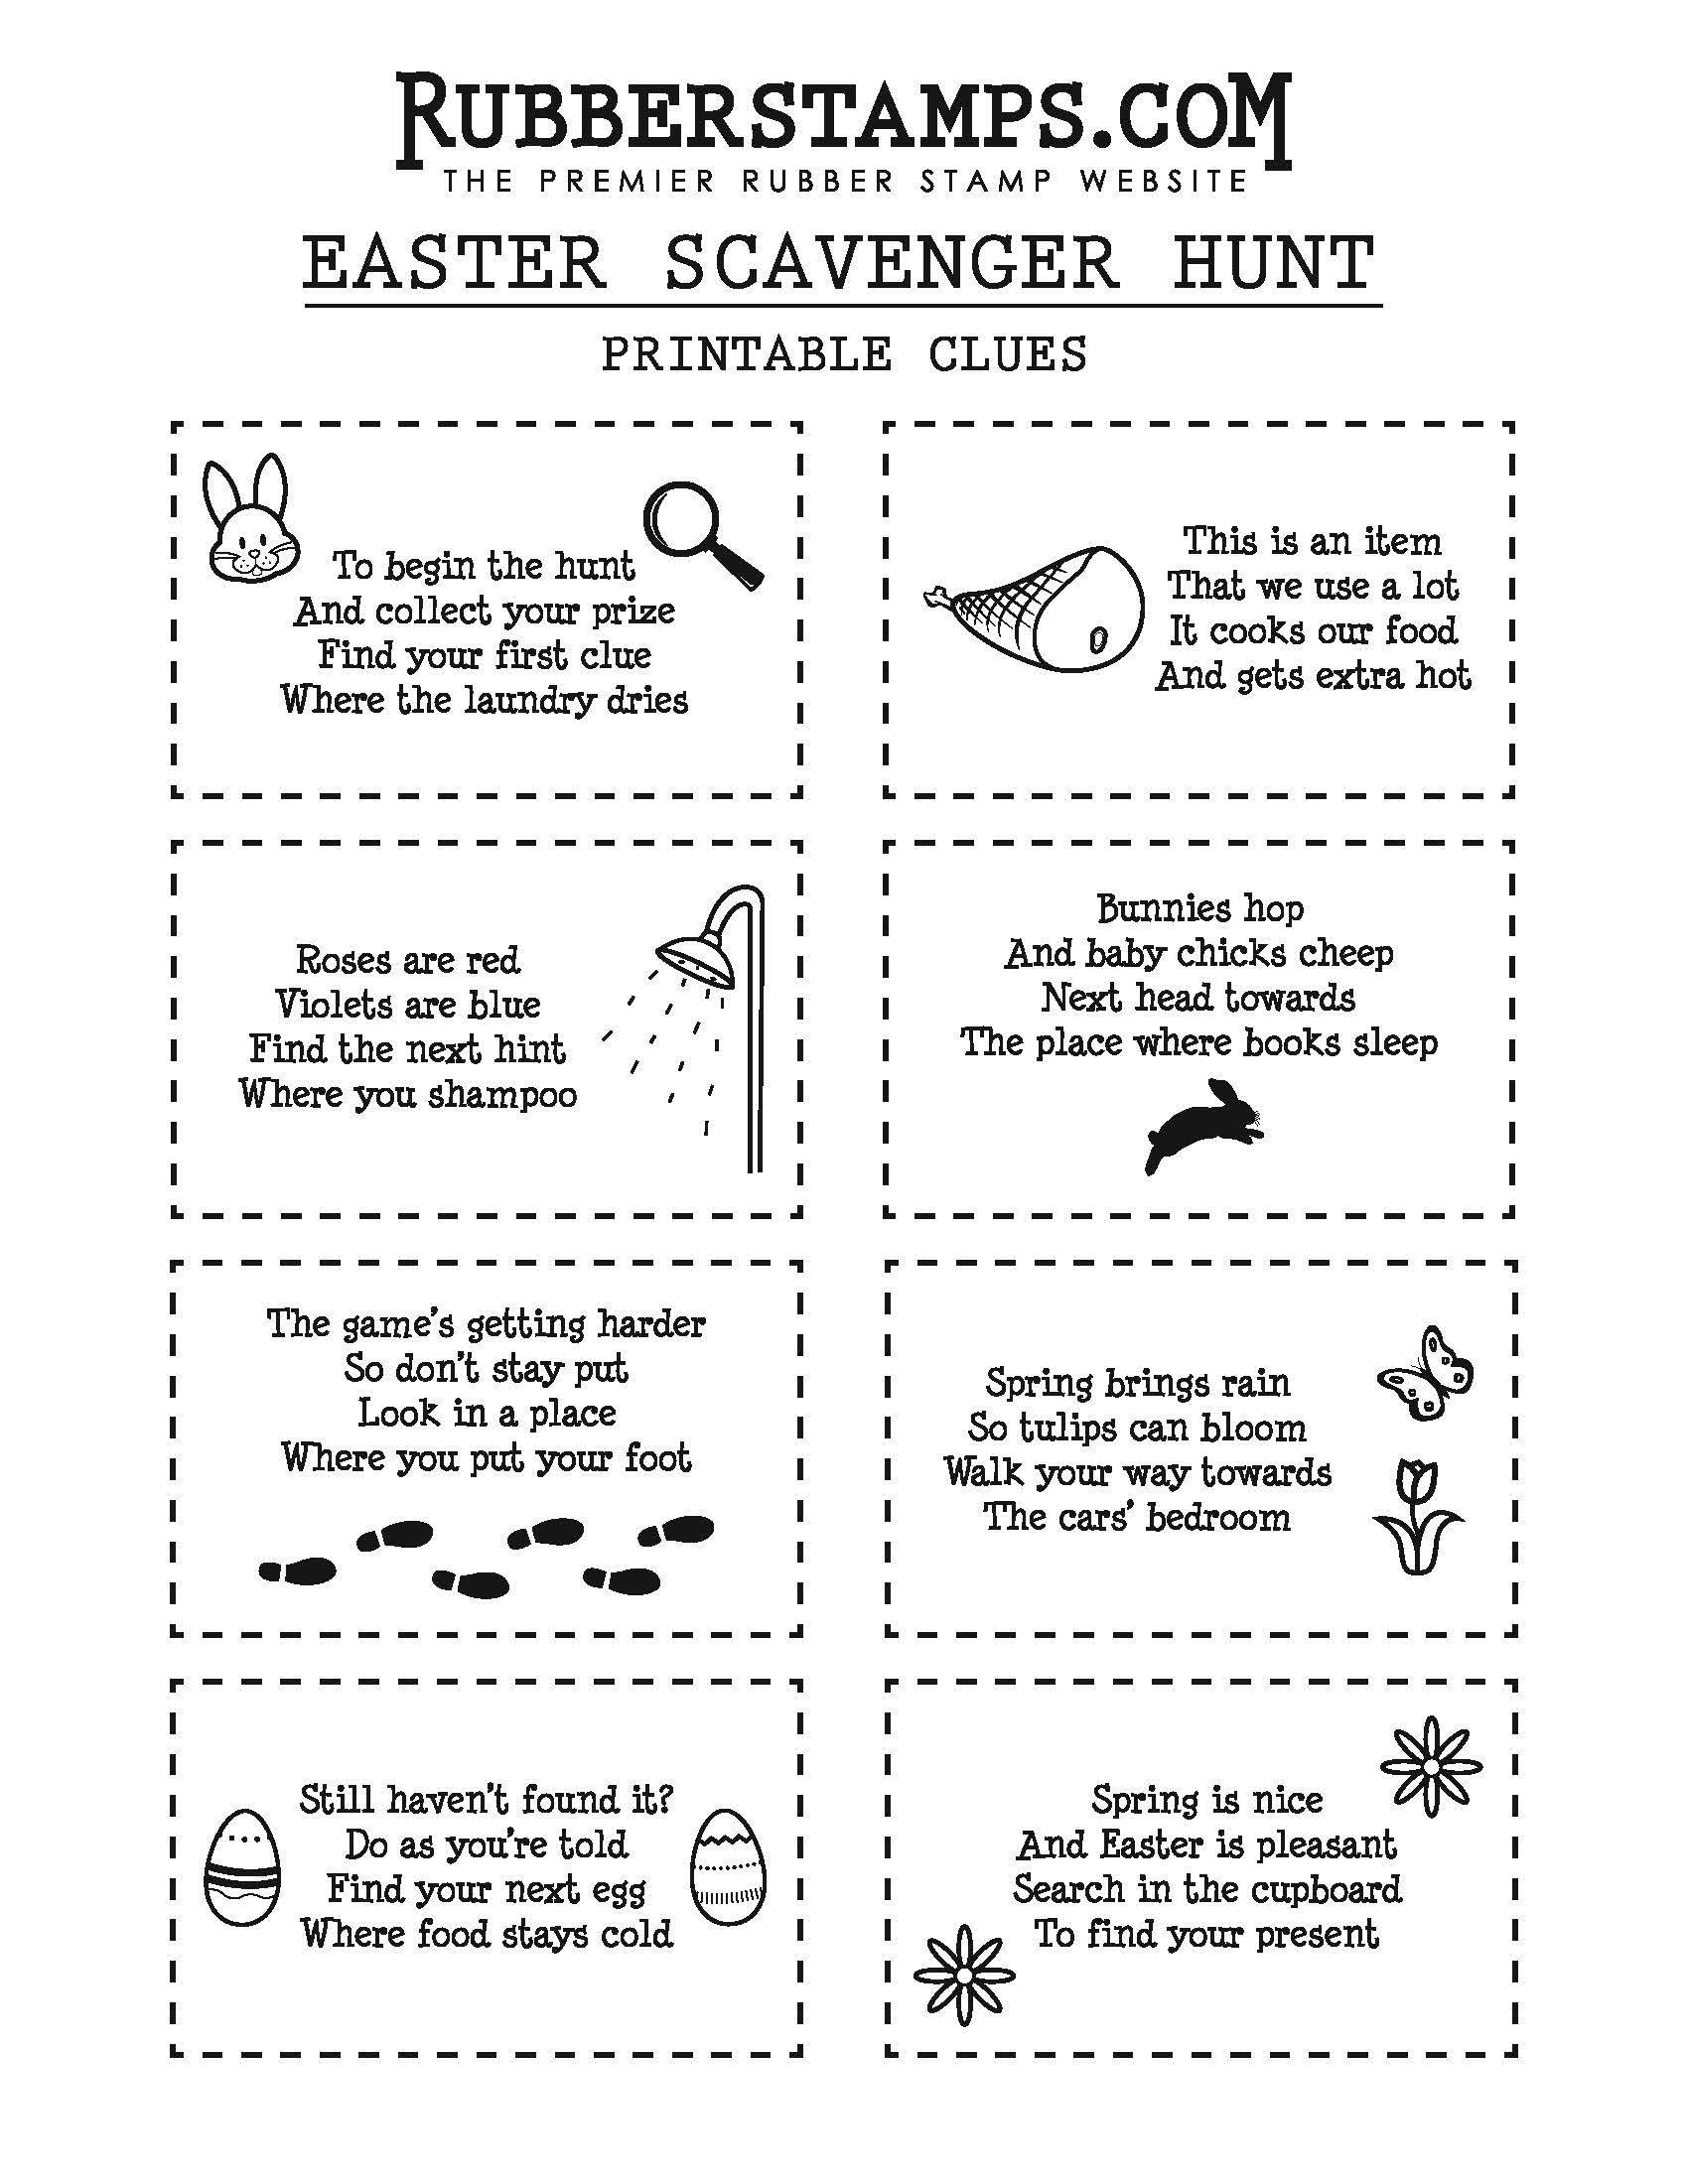 DIY Easter Scavenger Hunt Clues + Free Printable – RubberStamps.com